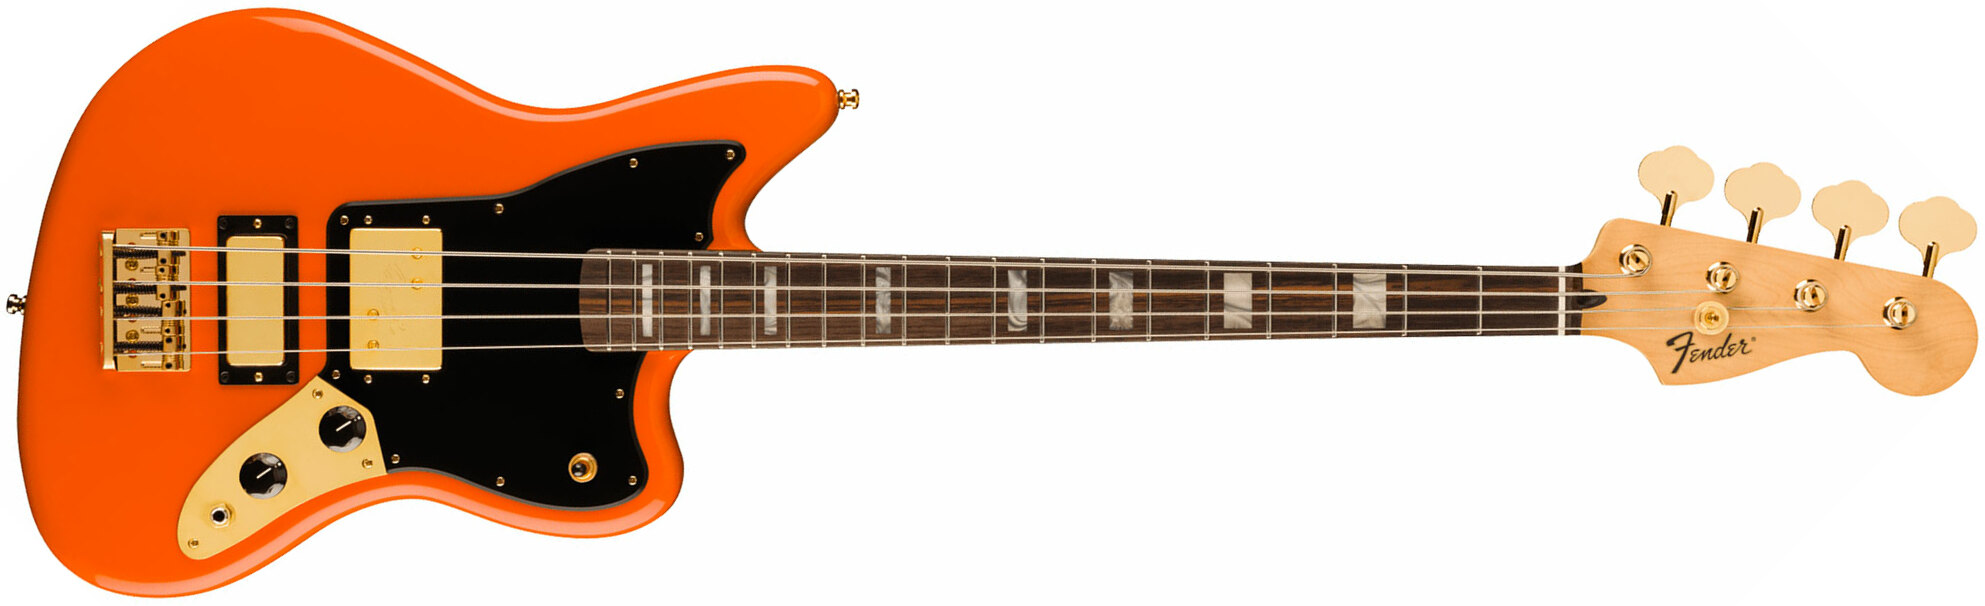 Fender Mike Kerr Jaguar Ltd Mex Signature Rw - Tiger's Blood Orange - Solidbody E-bass - Main picture